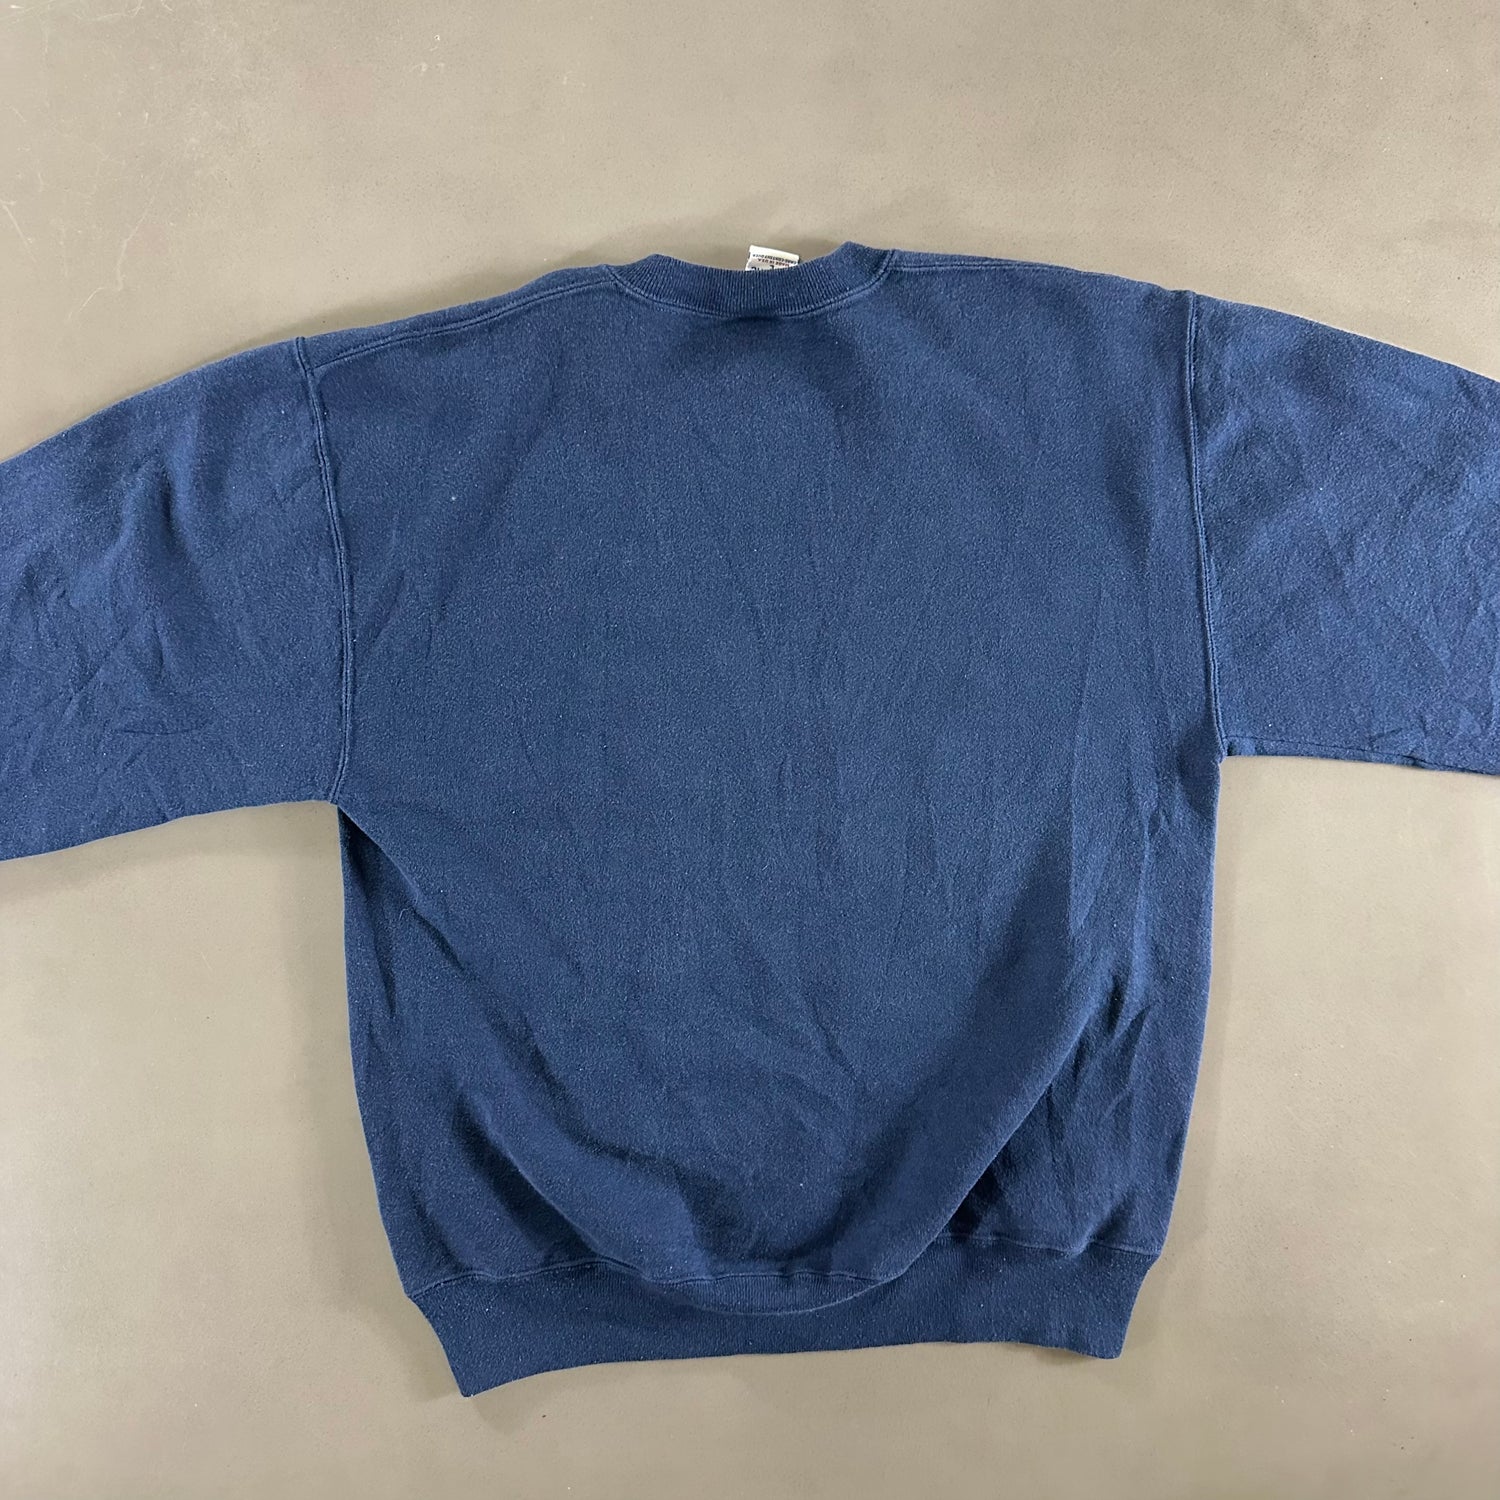 Vintage 1990s Sigma Sigma Sigma Sweatshirt size Large